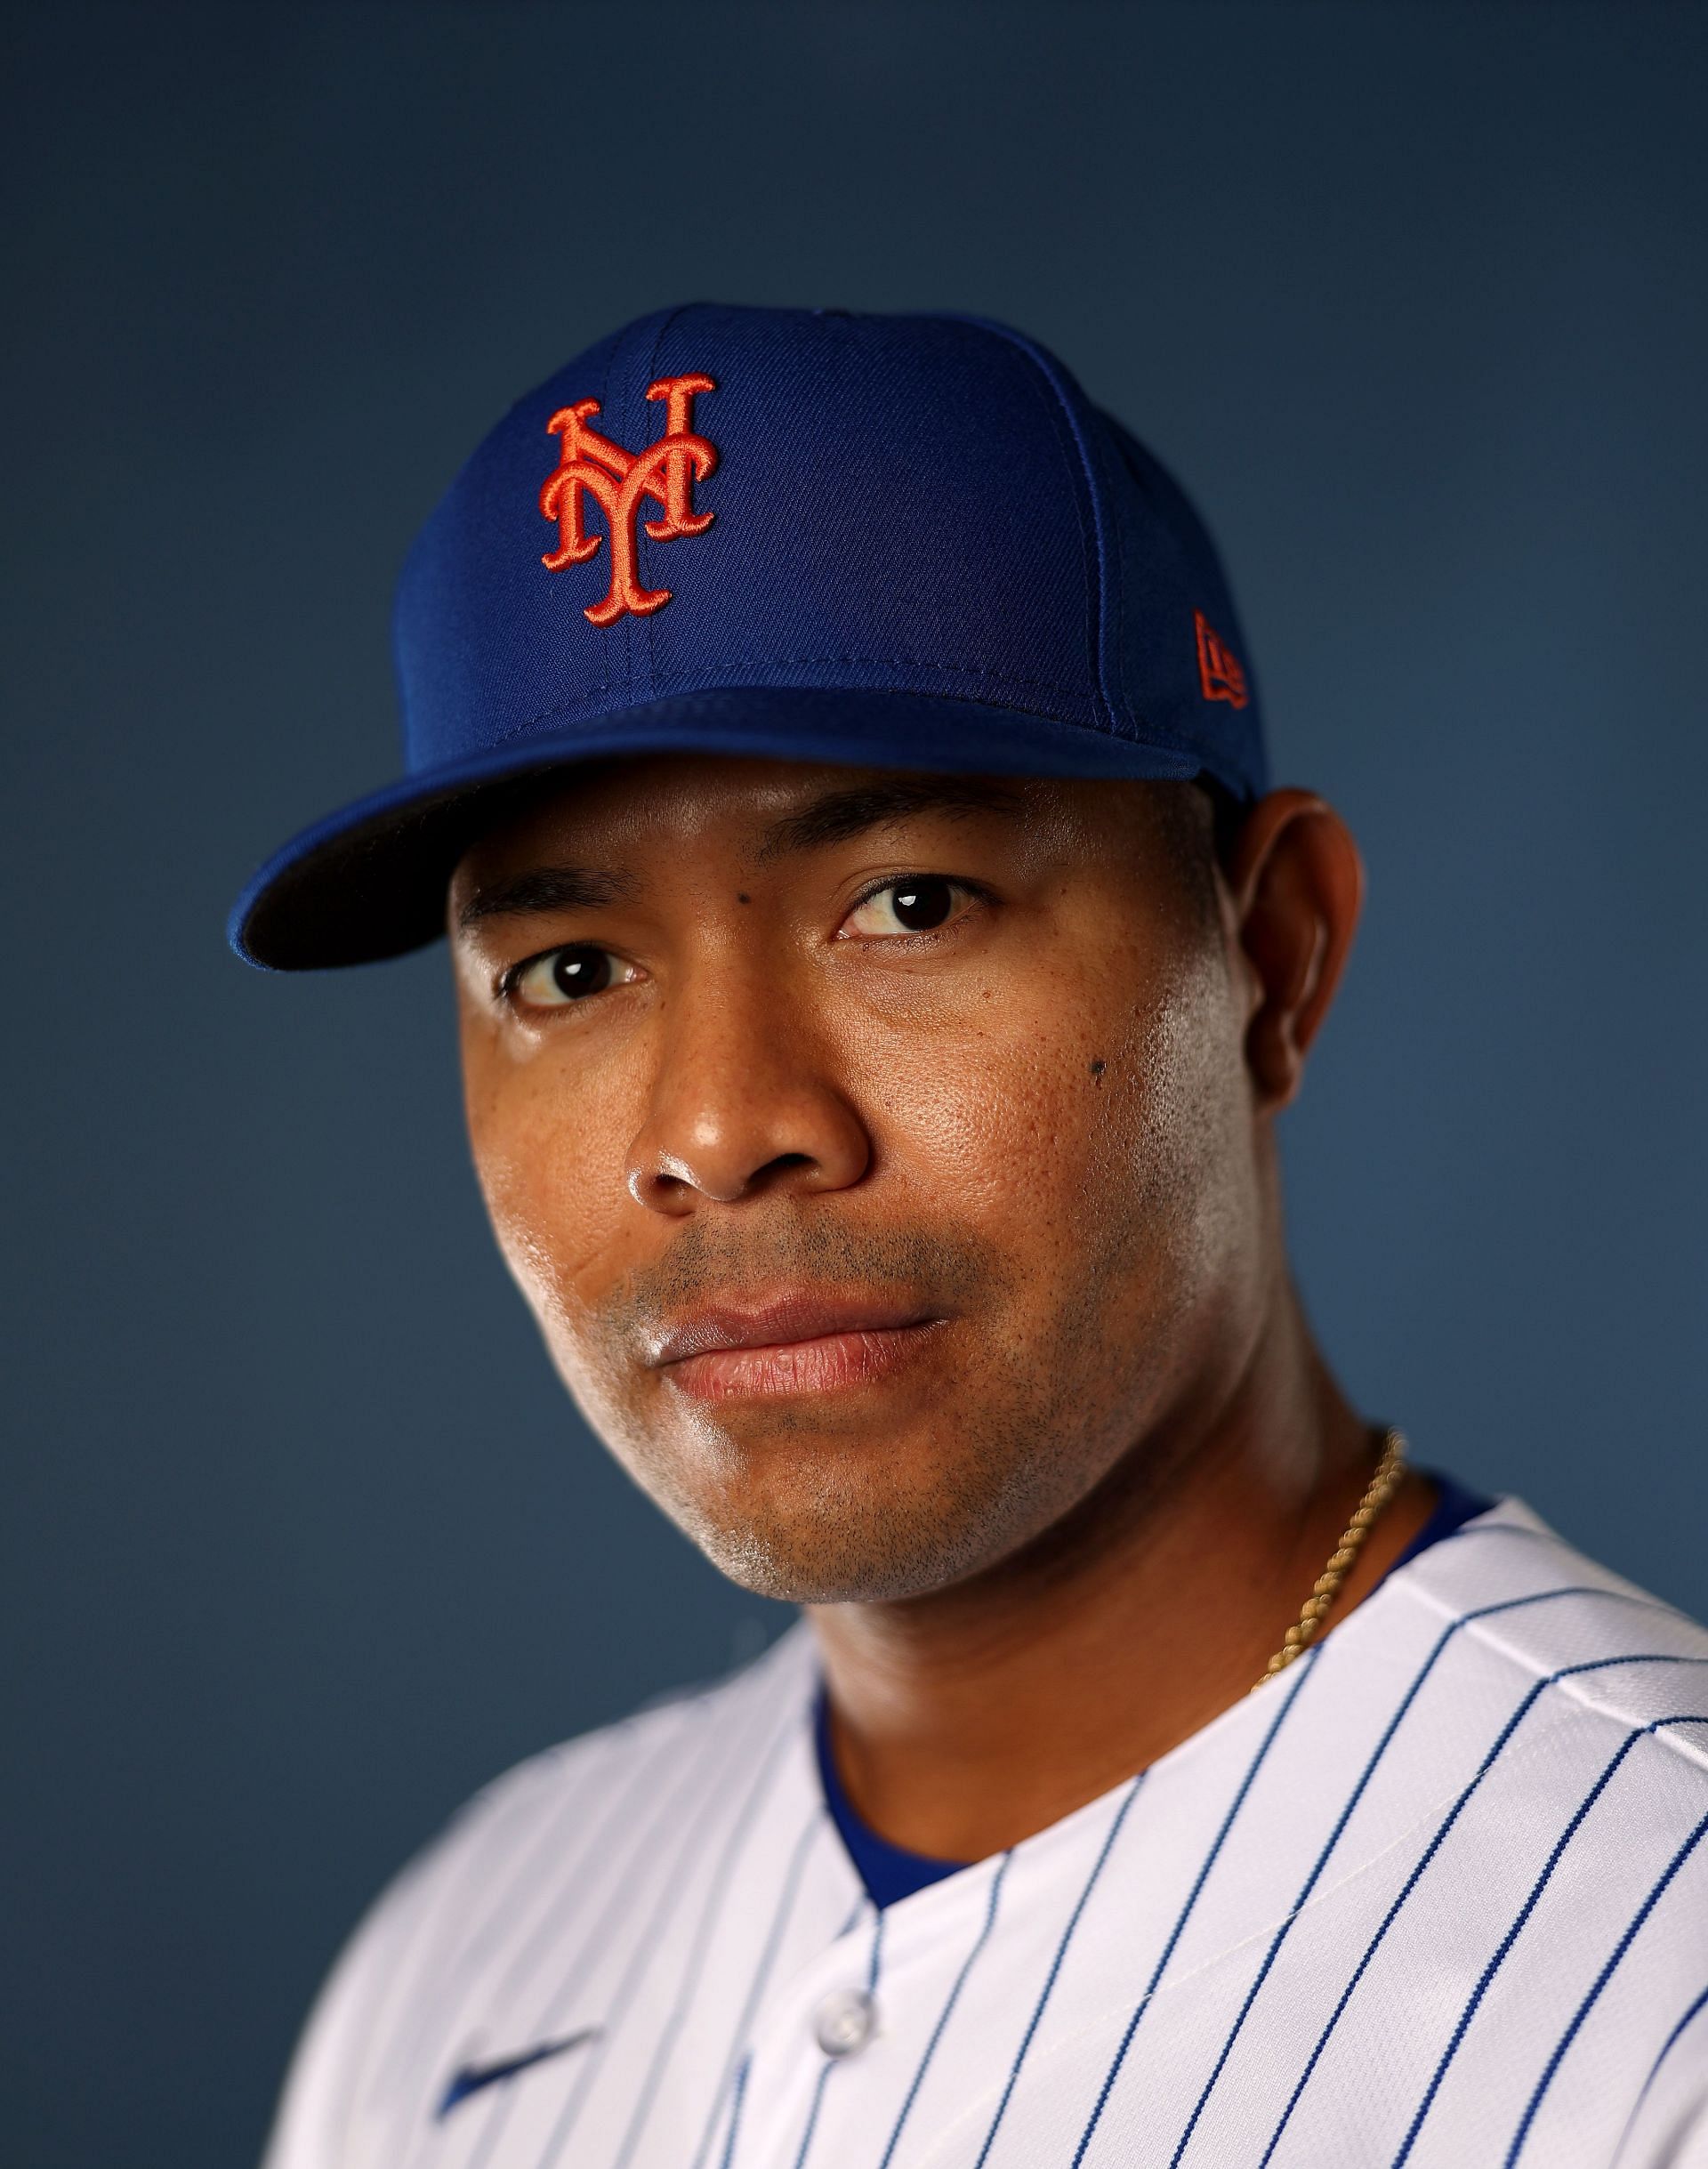 Jose Quintana of the New York Mets